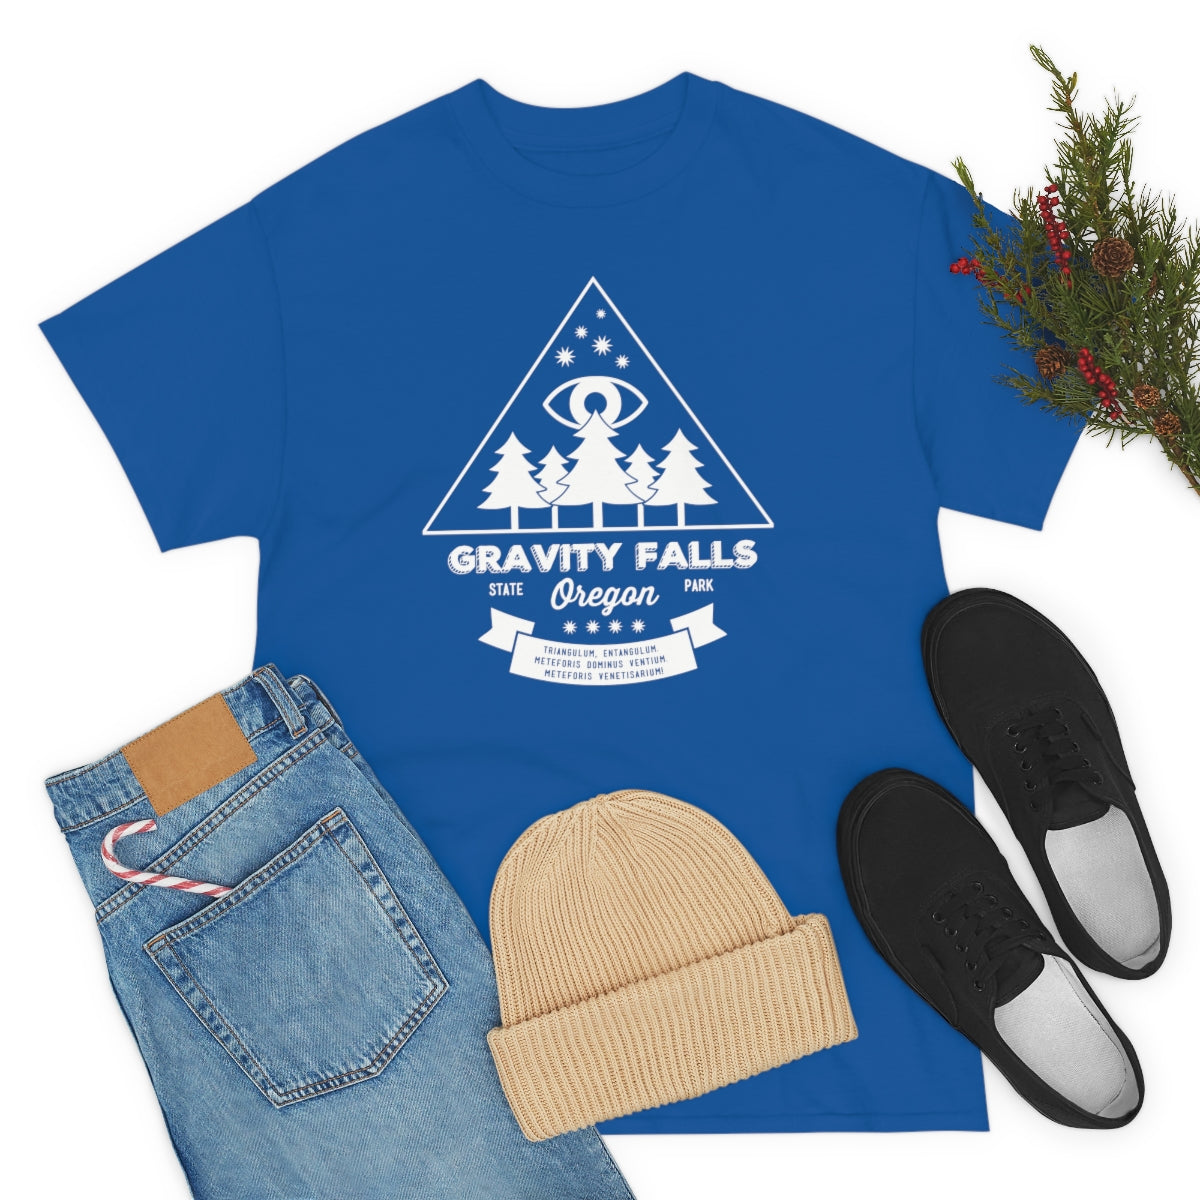 Gravity Falls - State Oregon Park T-Shirt